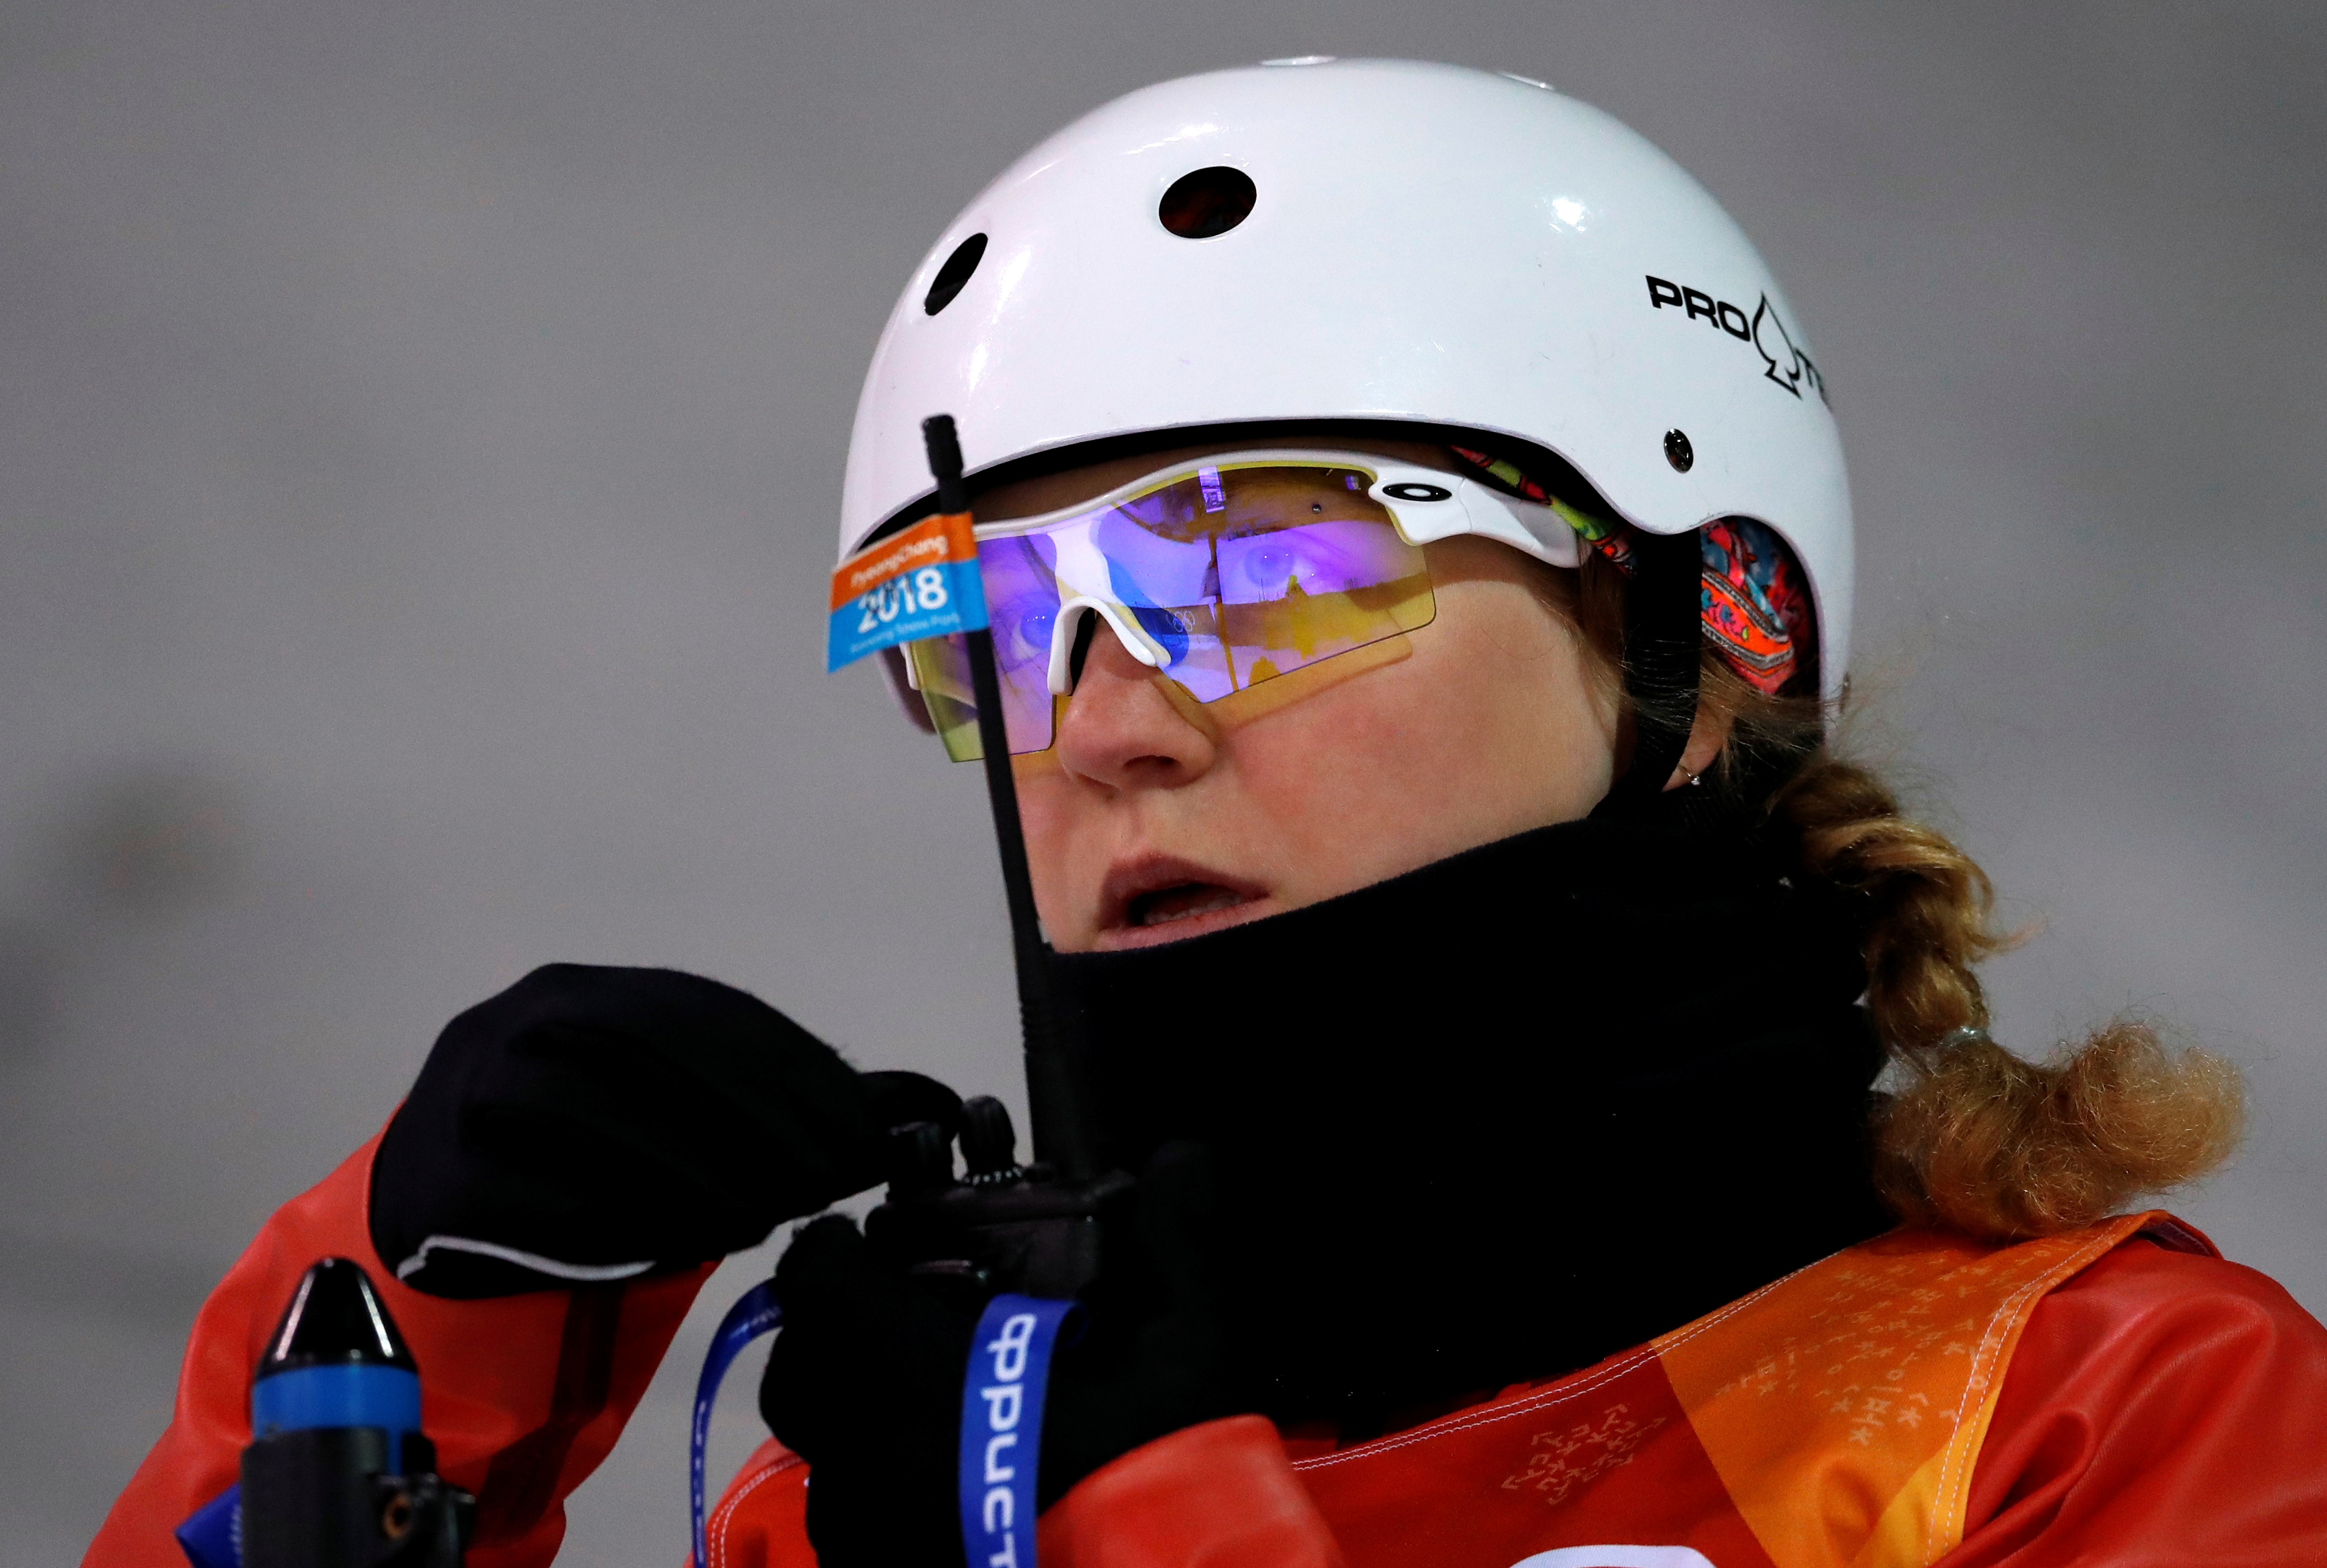 Eigen hier Leeds Belarus detains, fines Olympic skier for violating protest laws | Reuters